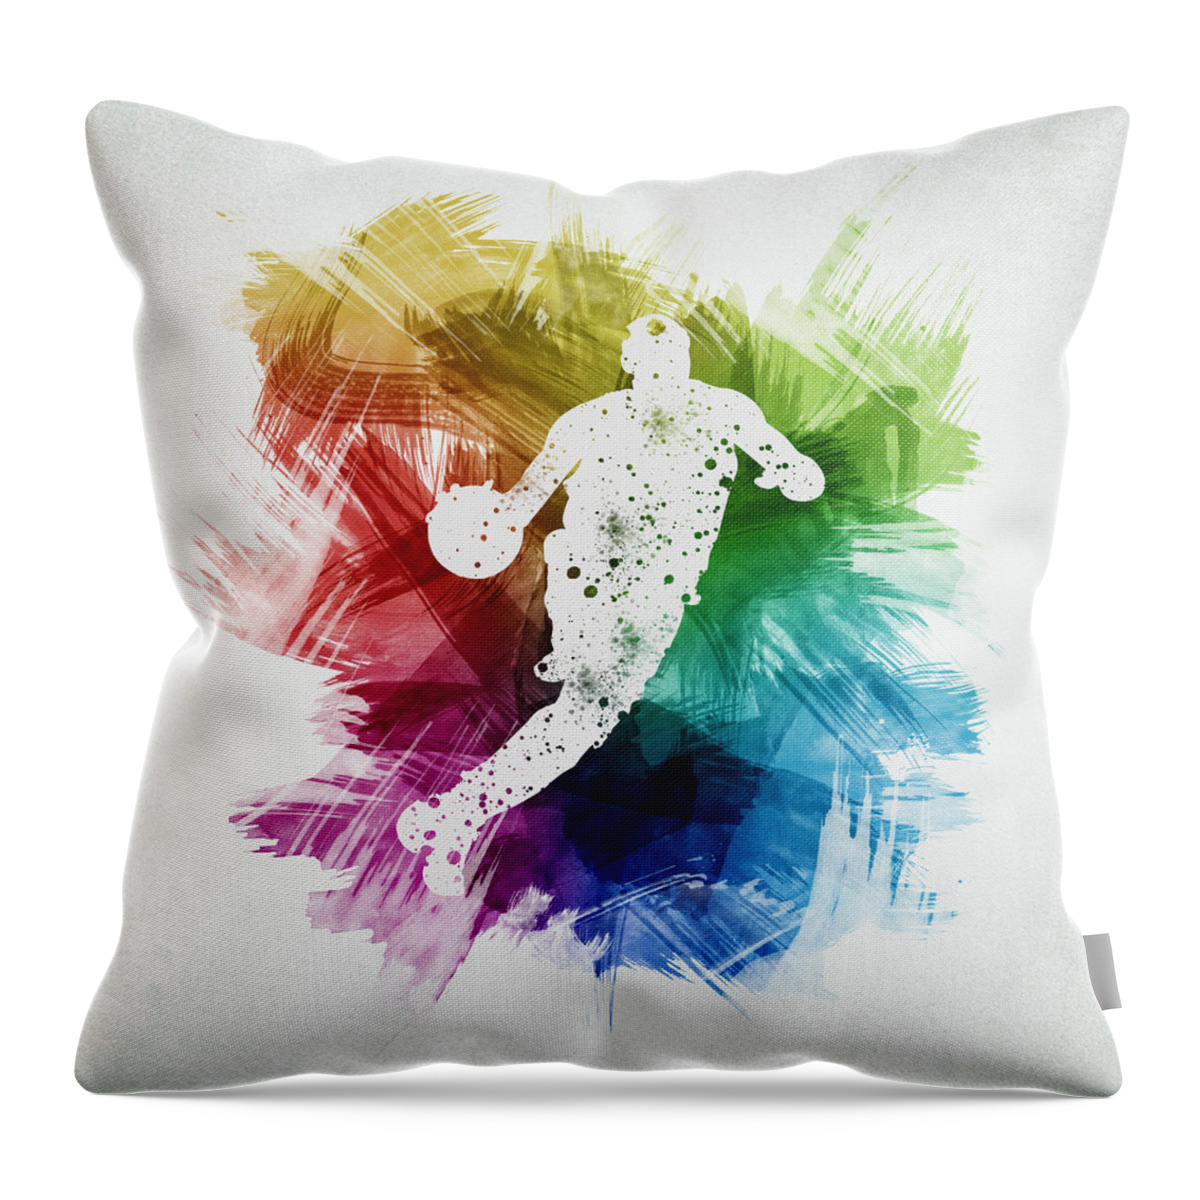 Basketball Throw Pillow featuring the digital art Basketball Player Art 20 by Aged Pixel